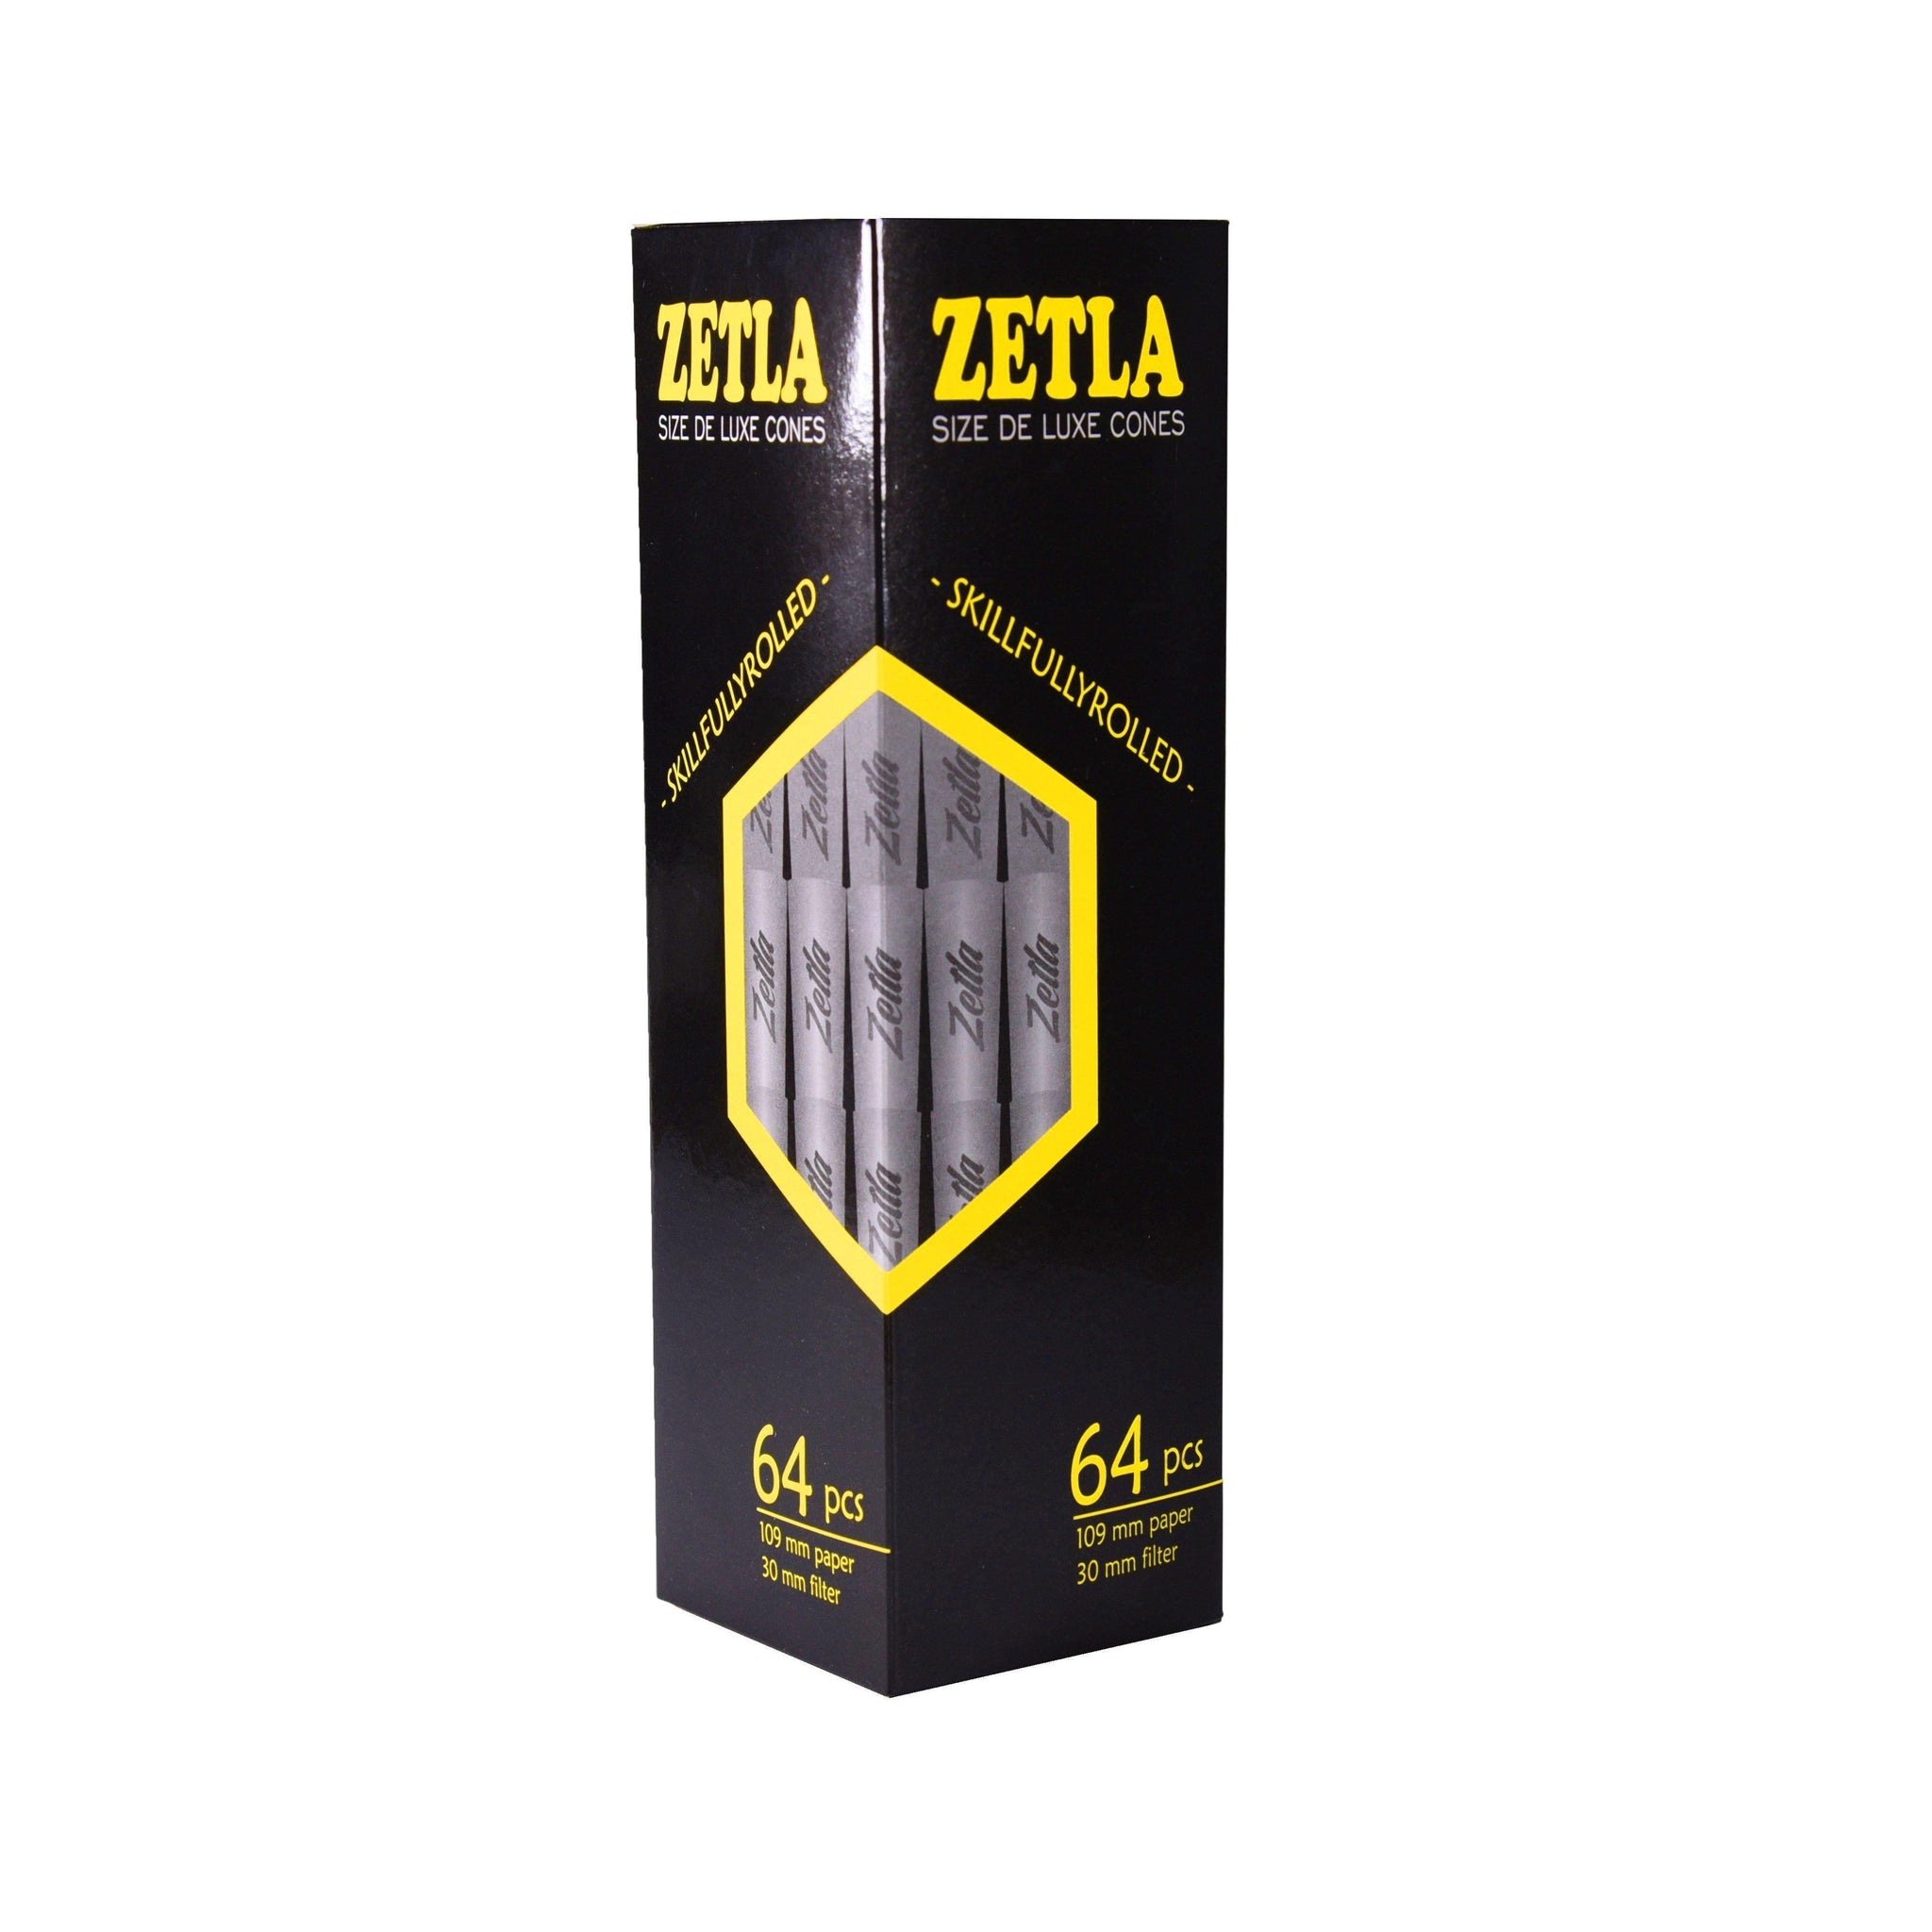 Pre-Rolled Cones Zetla King Size De Luxe 64 - ABK Usa